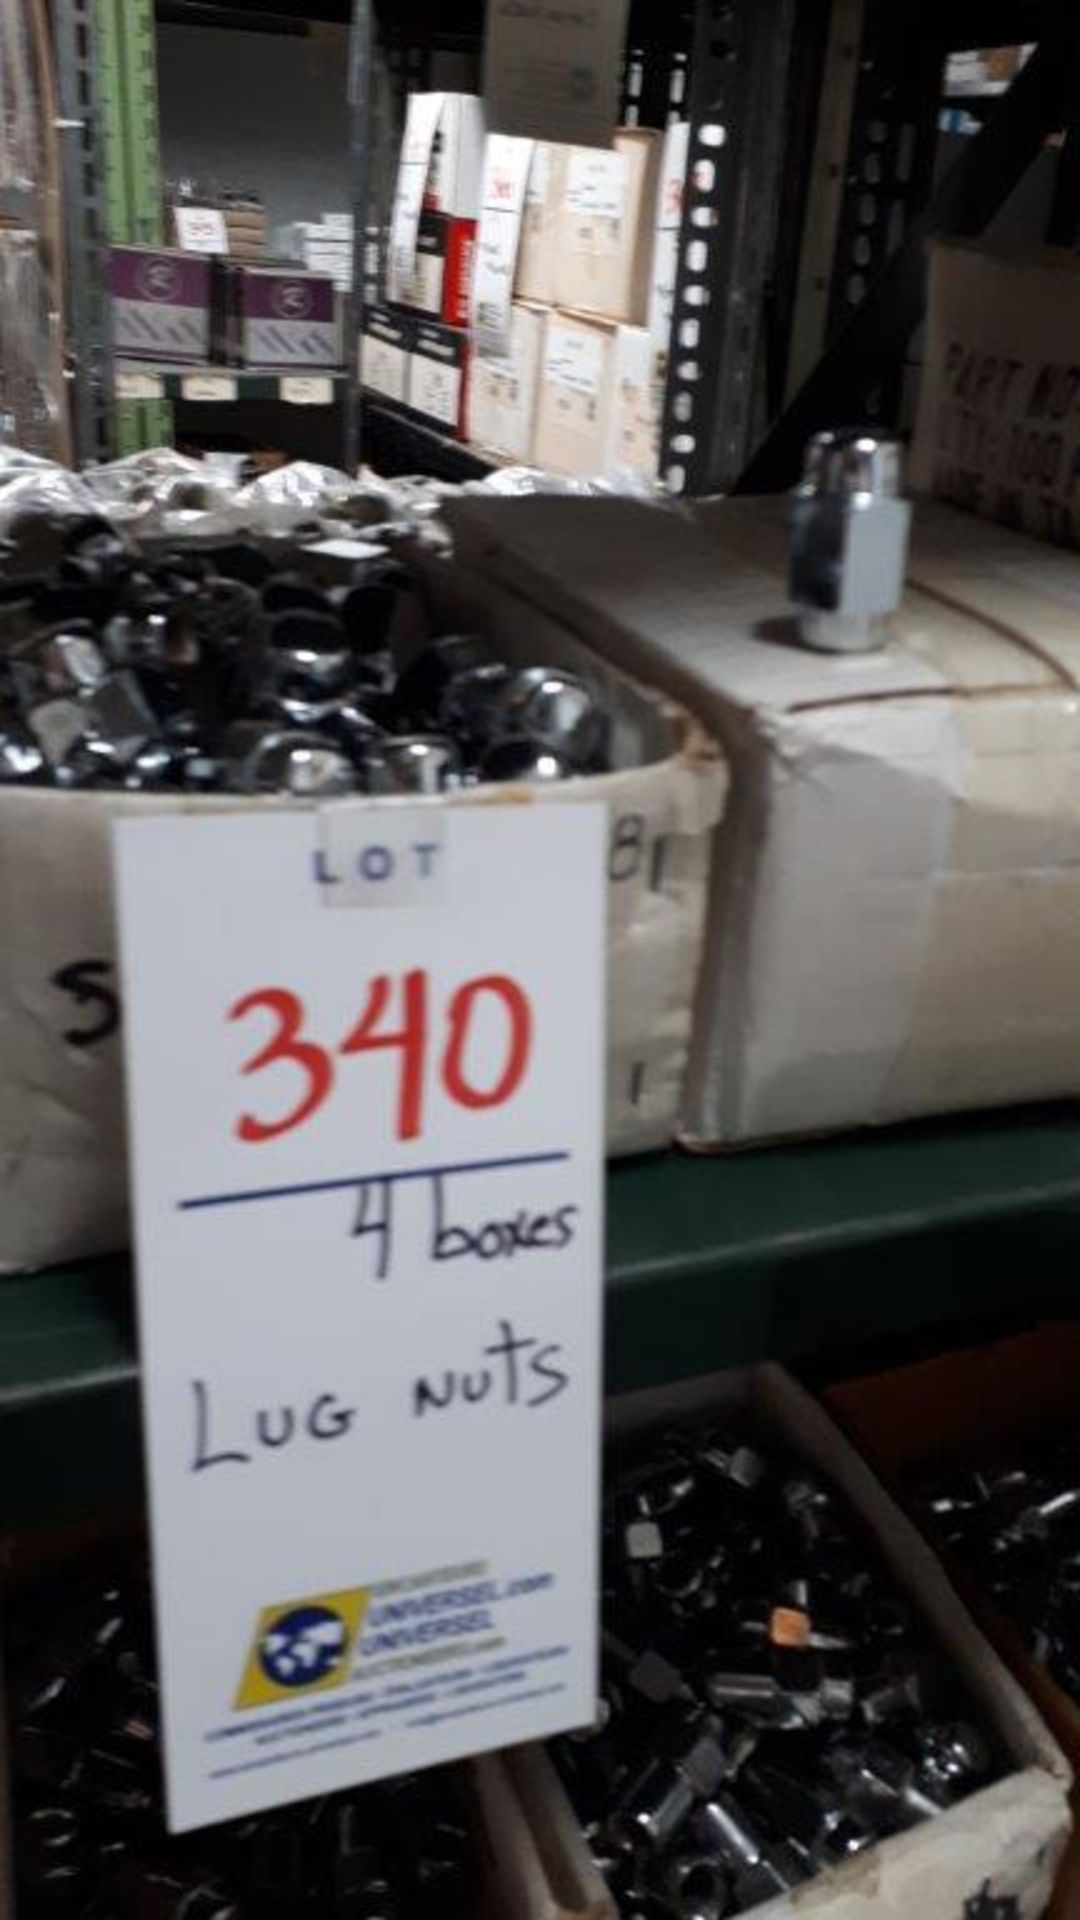 Lug nuts(boxes)